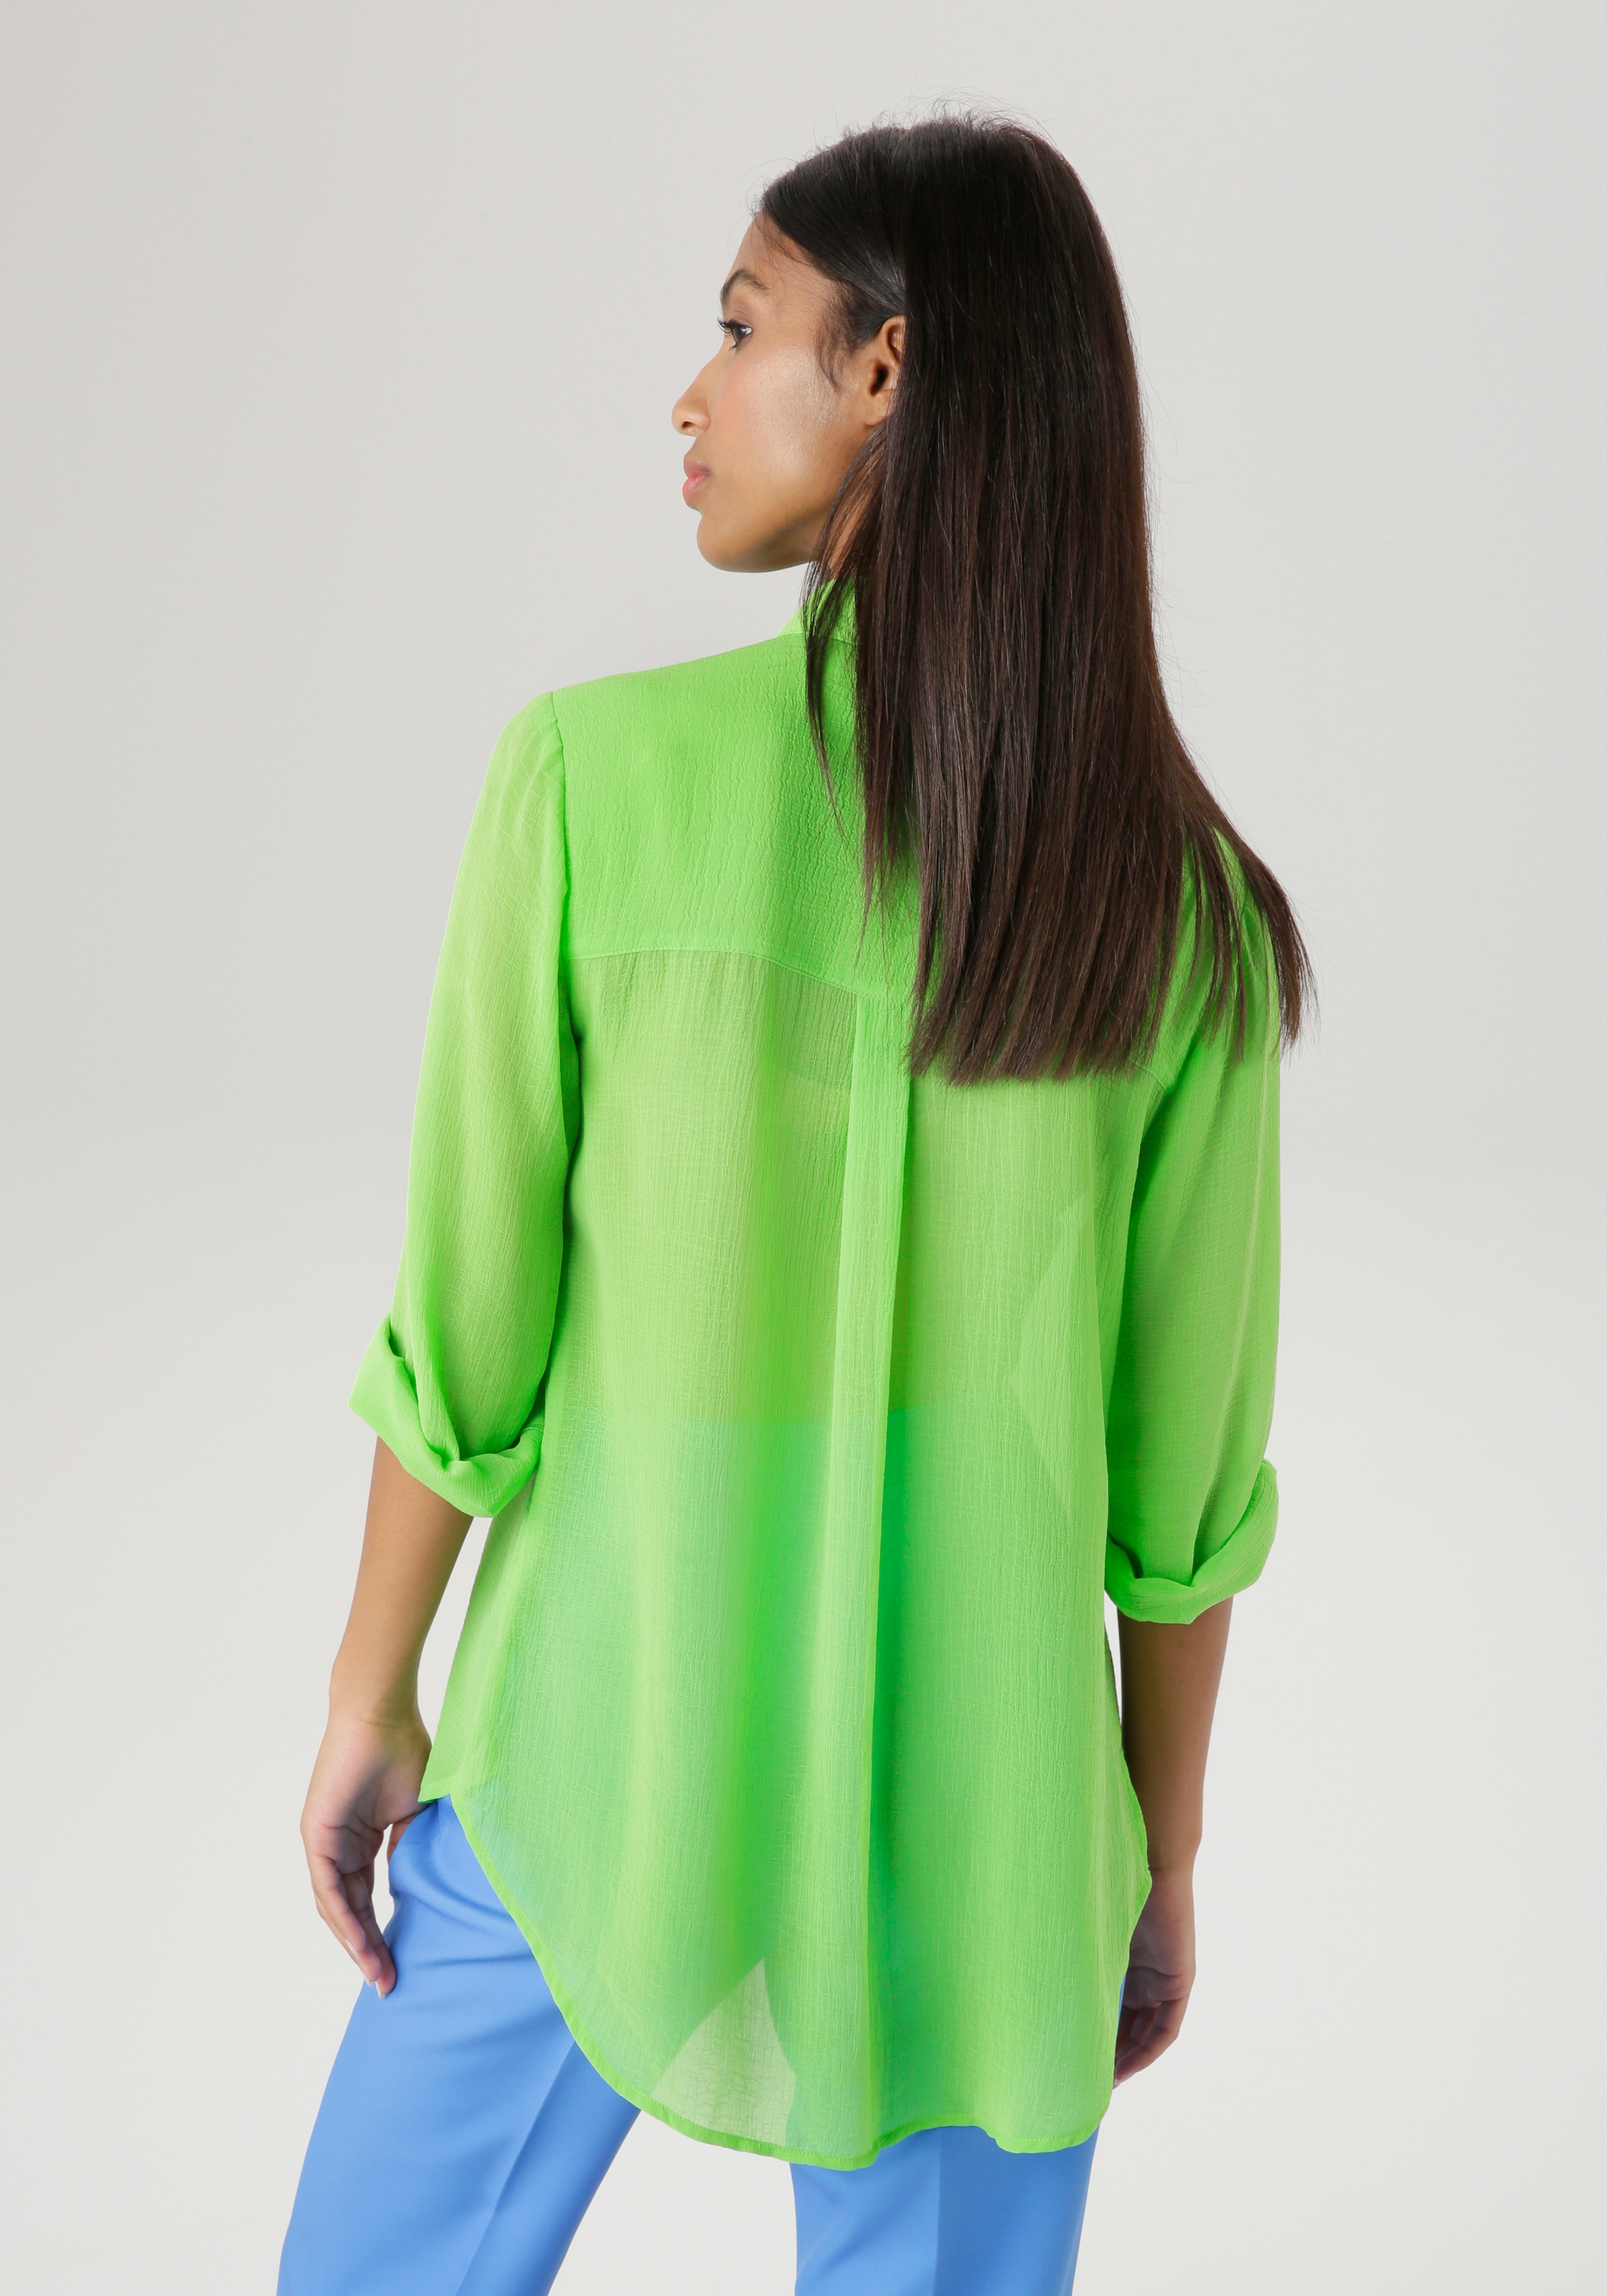 kaufen KOLLEKTION Chiffon aus Strukturmuster Aniston - mit SELECTED transparentem online Hemdbluse, NEUE